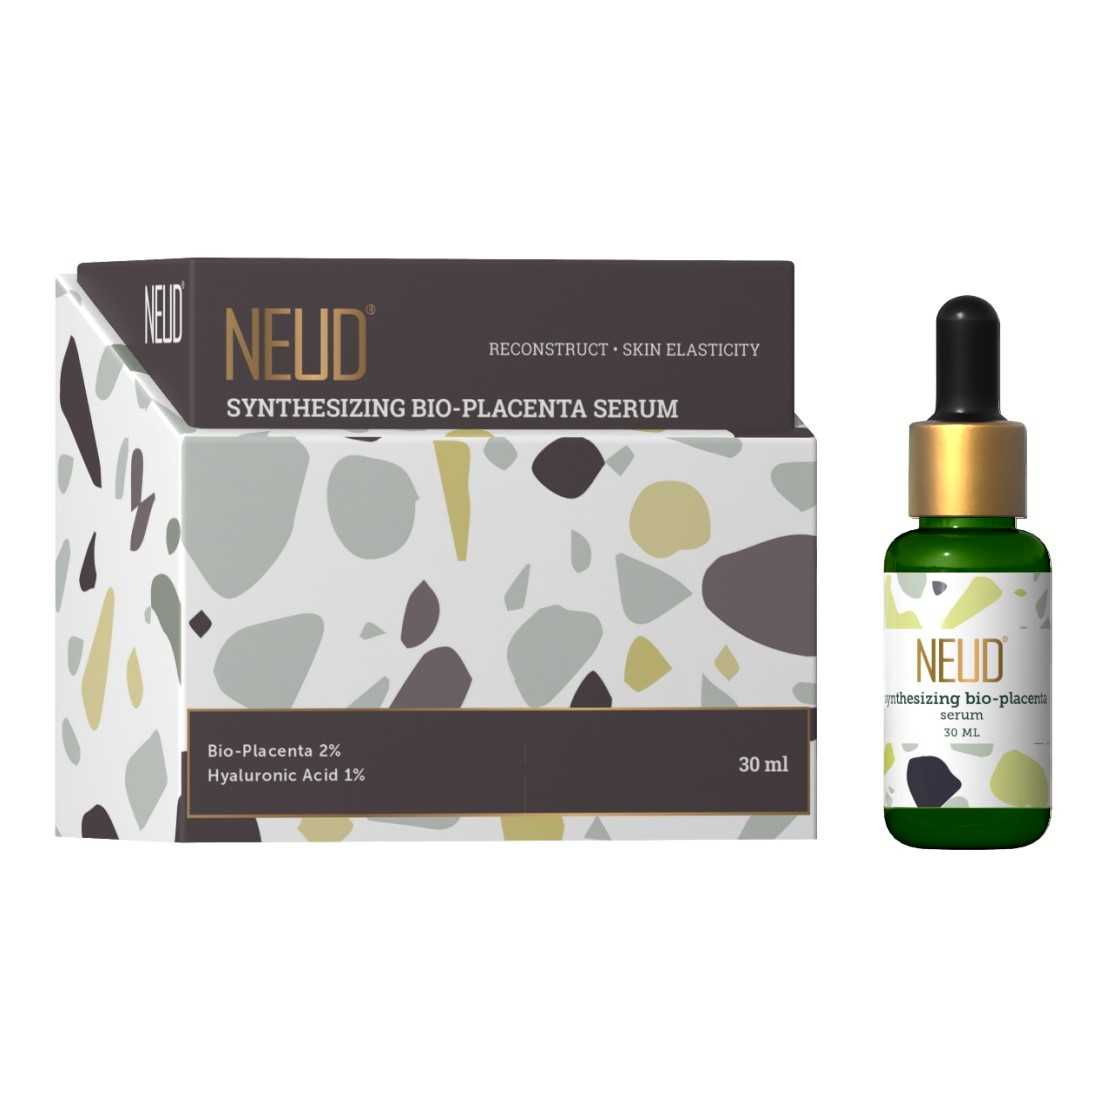 NEUD Synthesizing Bio-Placenta Serum With Hyaluronic Acid and Advanced Skin Ingredients - 30 ml